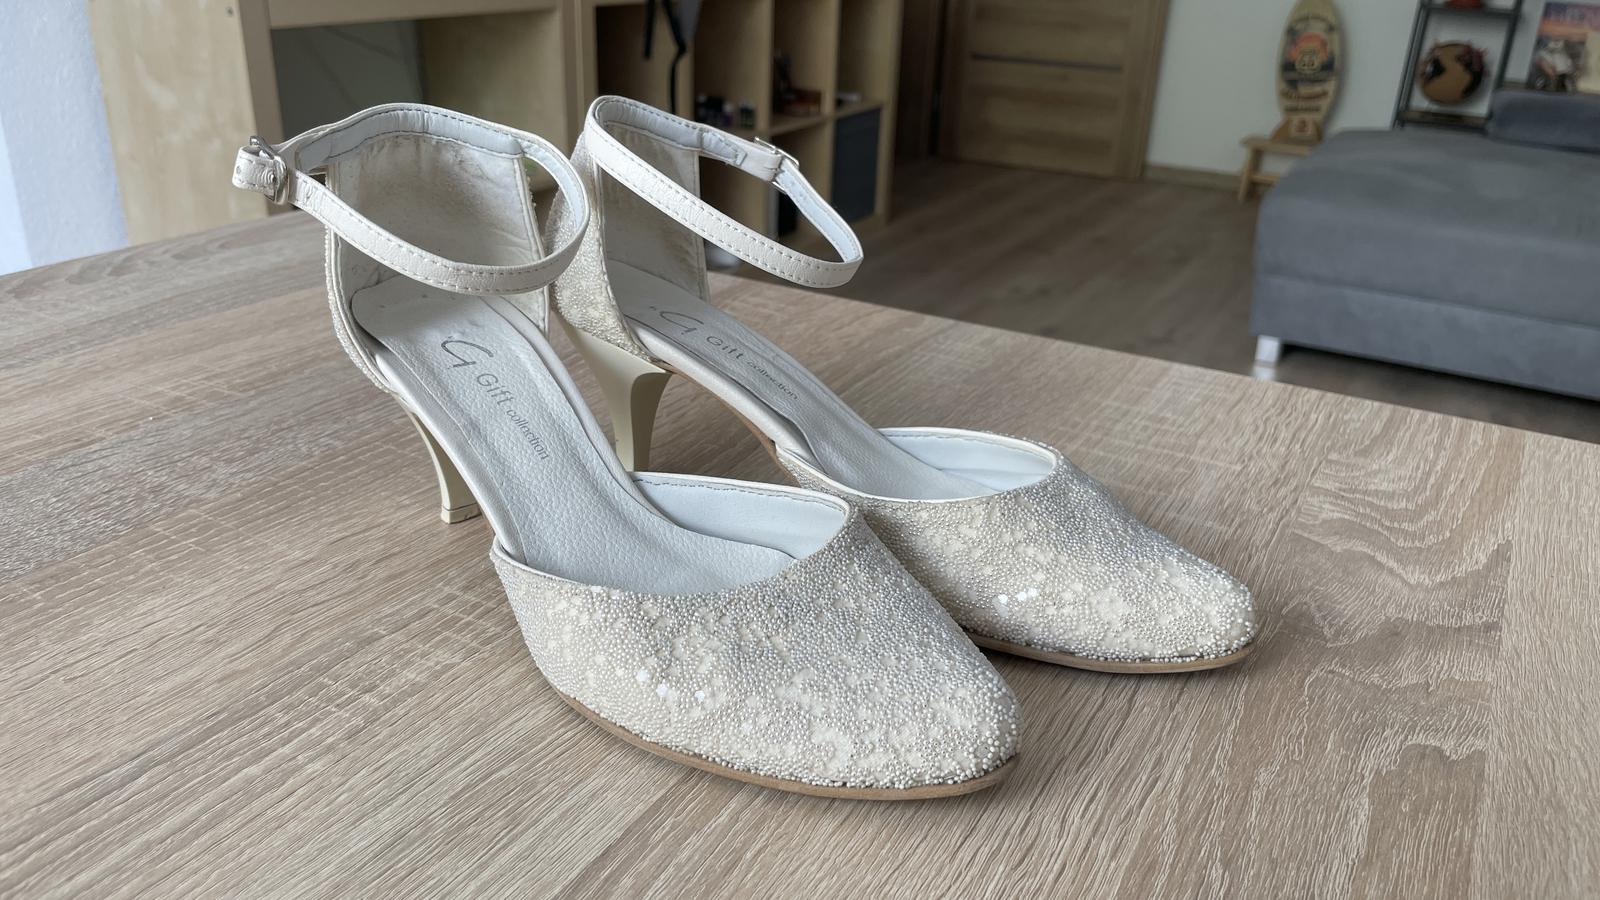 Biele svadobné topánky - Obrázok č. 2